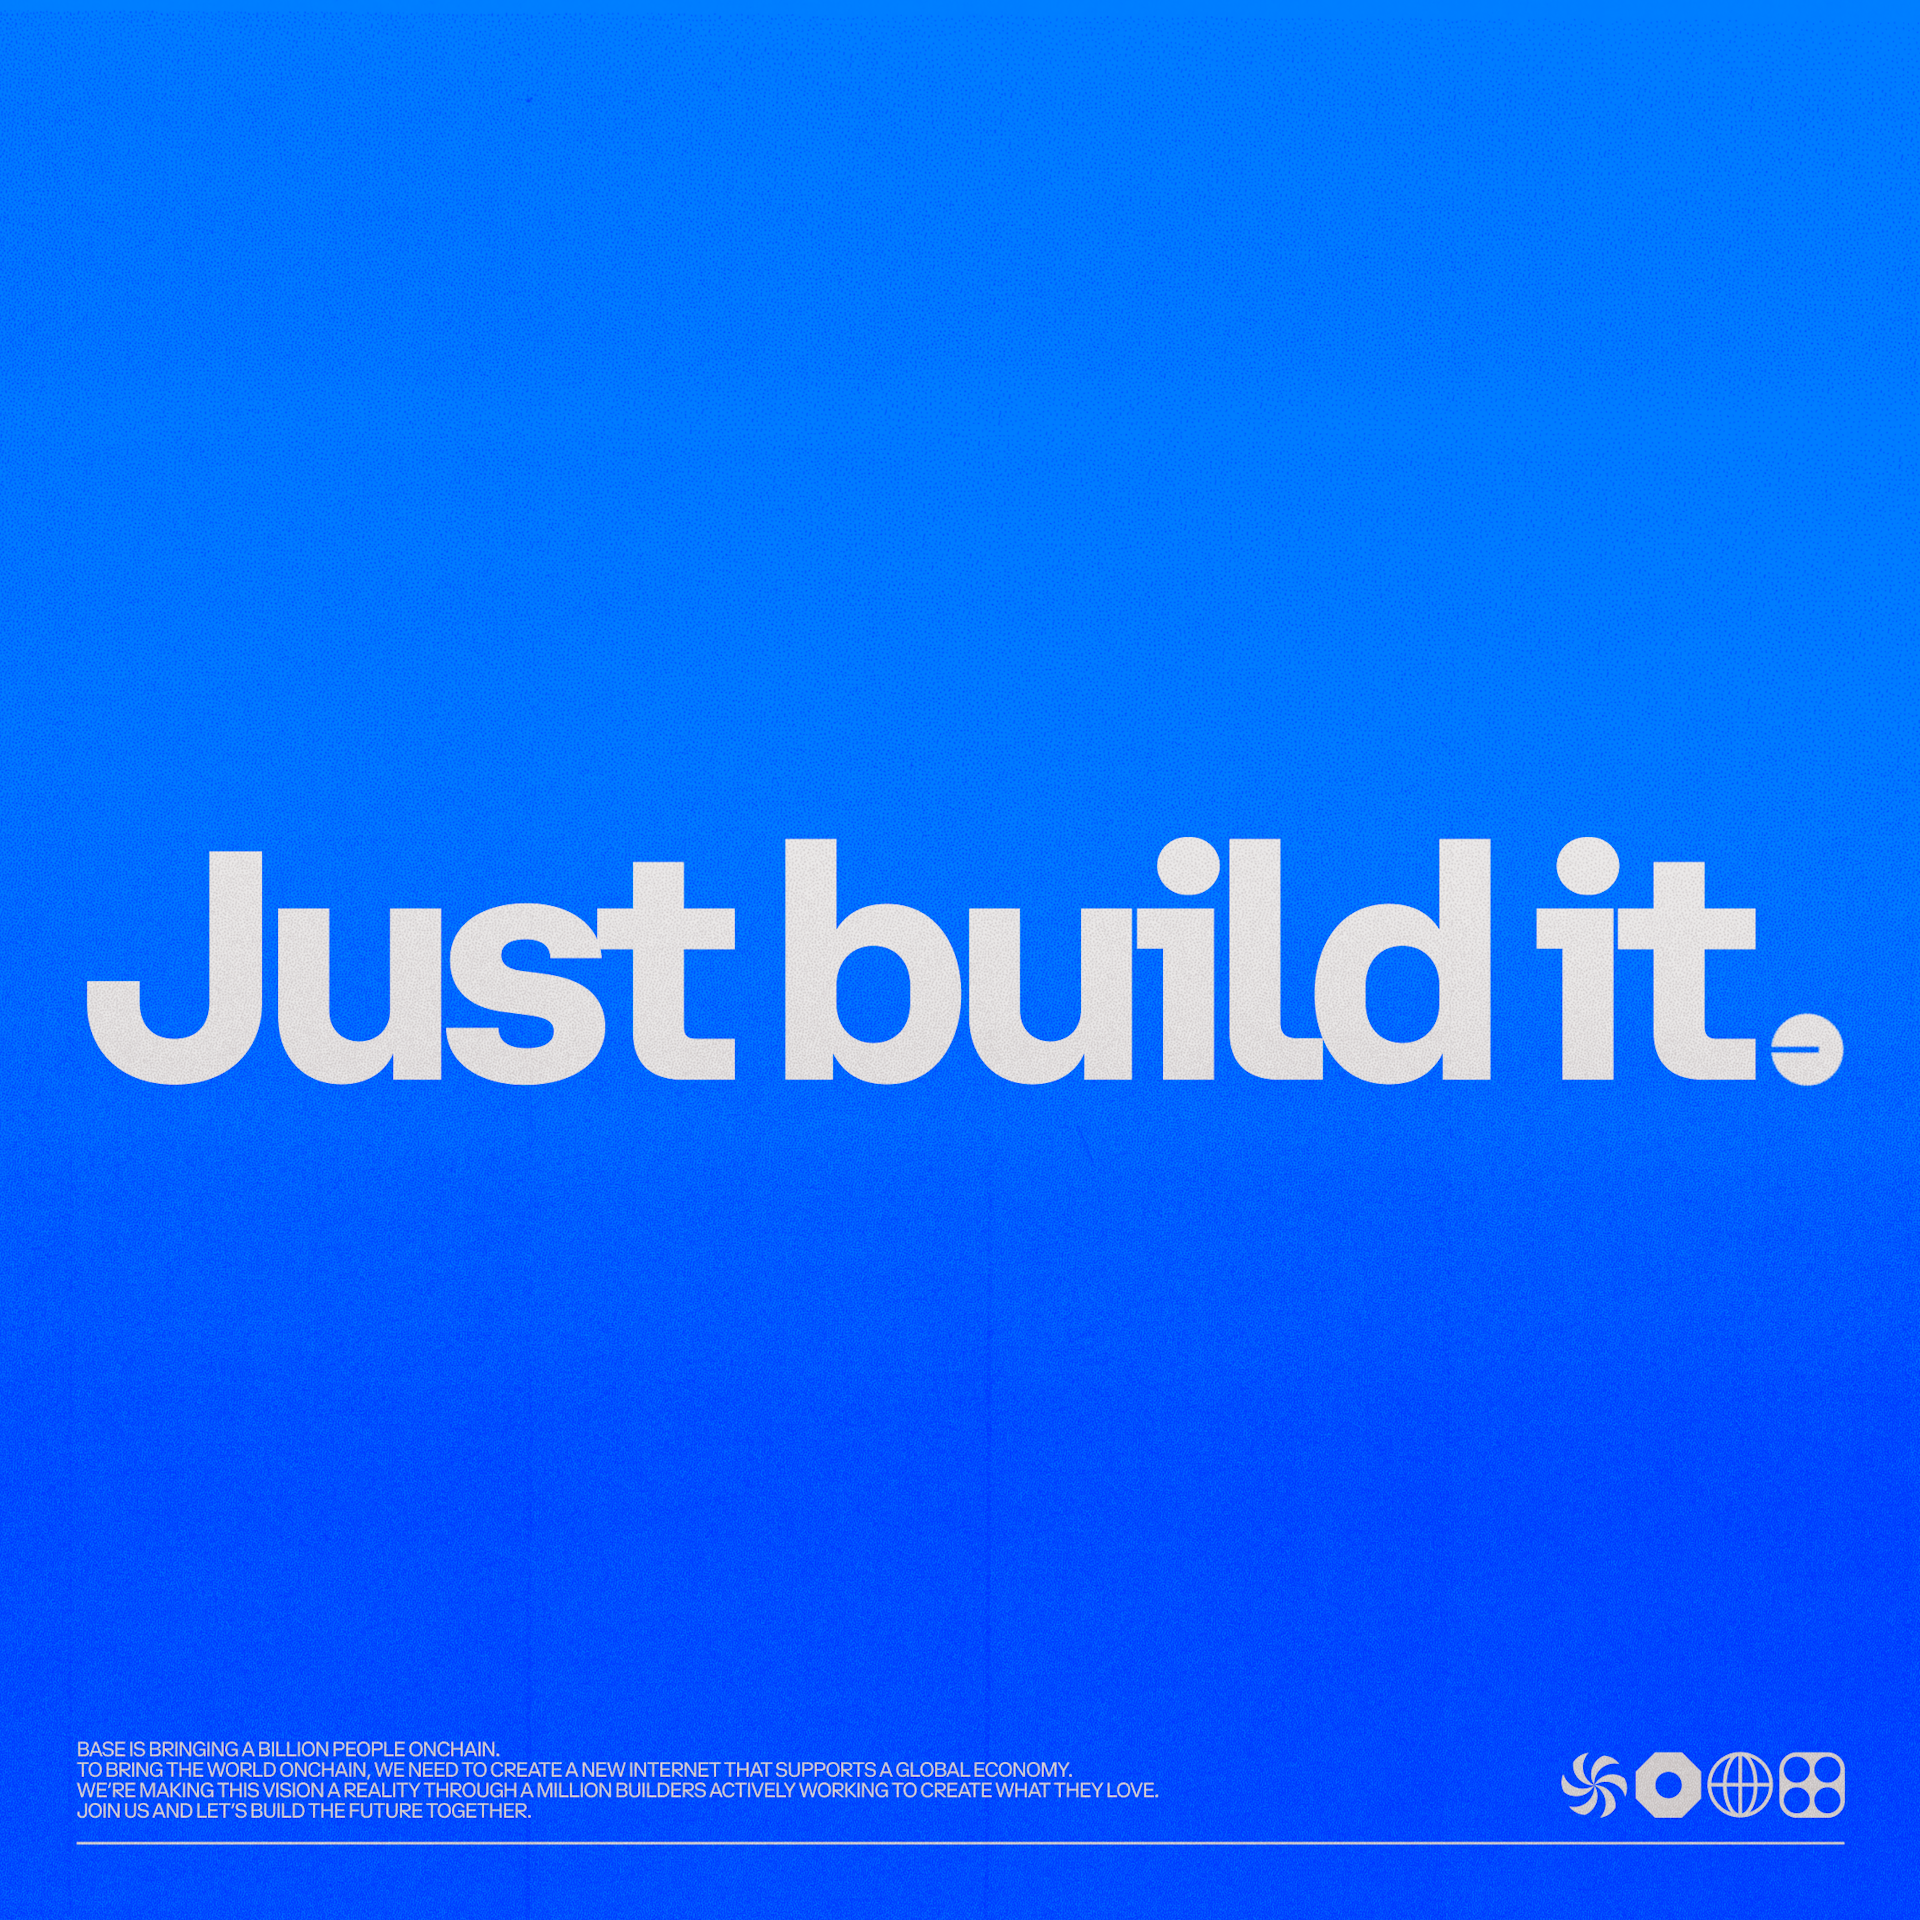 Just build it [001]